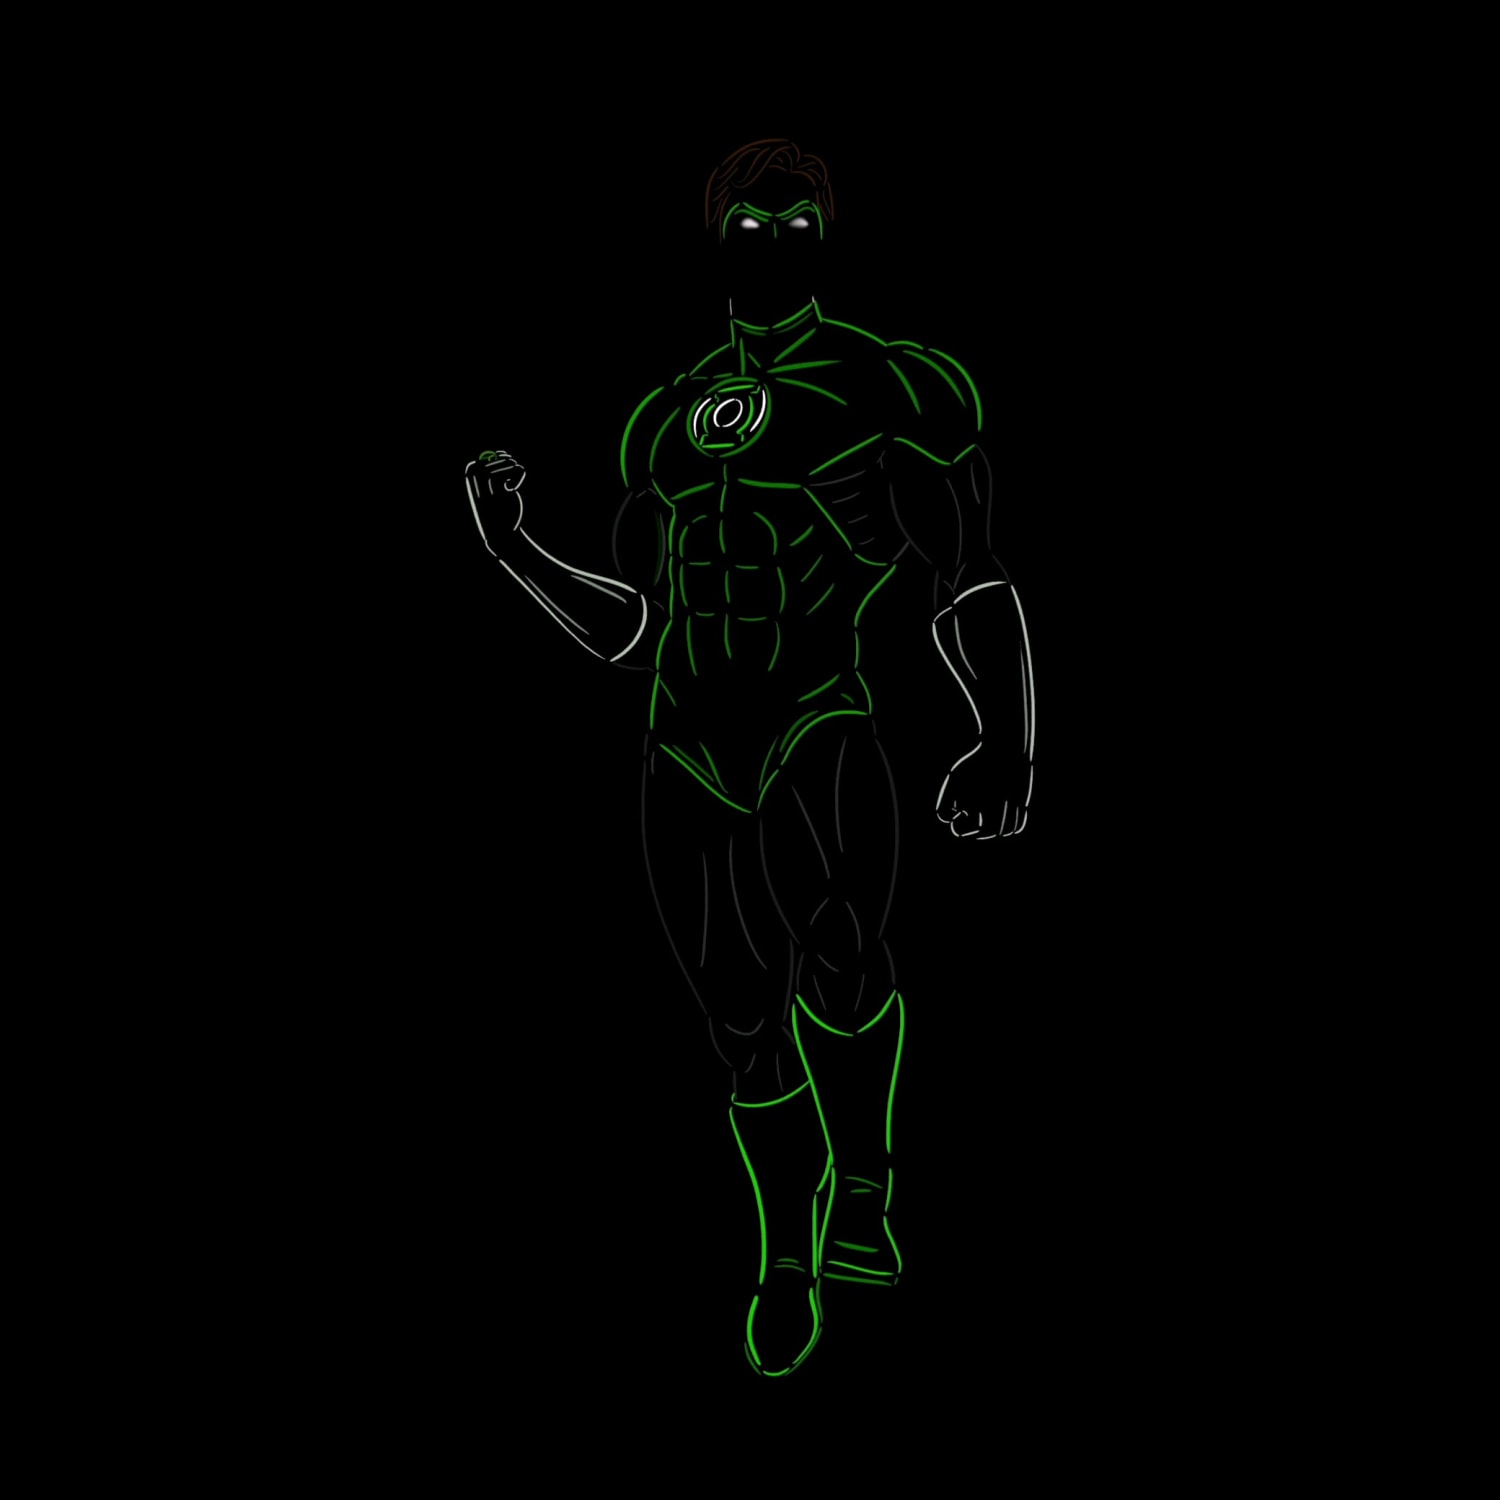 [Artwork] Hal Jordan (Green Lantern) minimal artwork